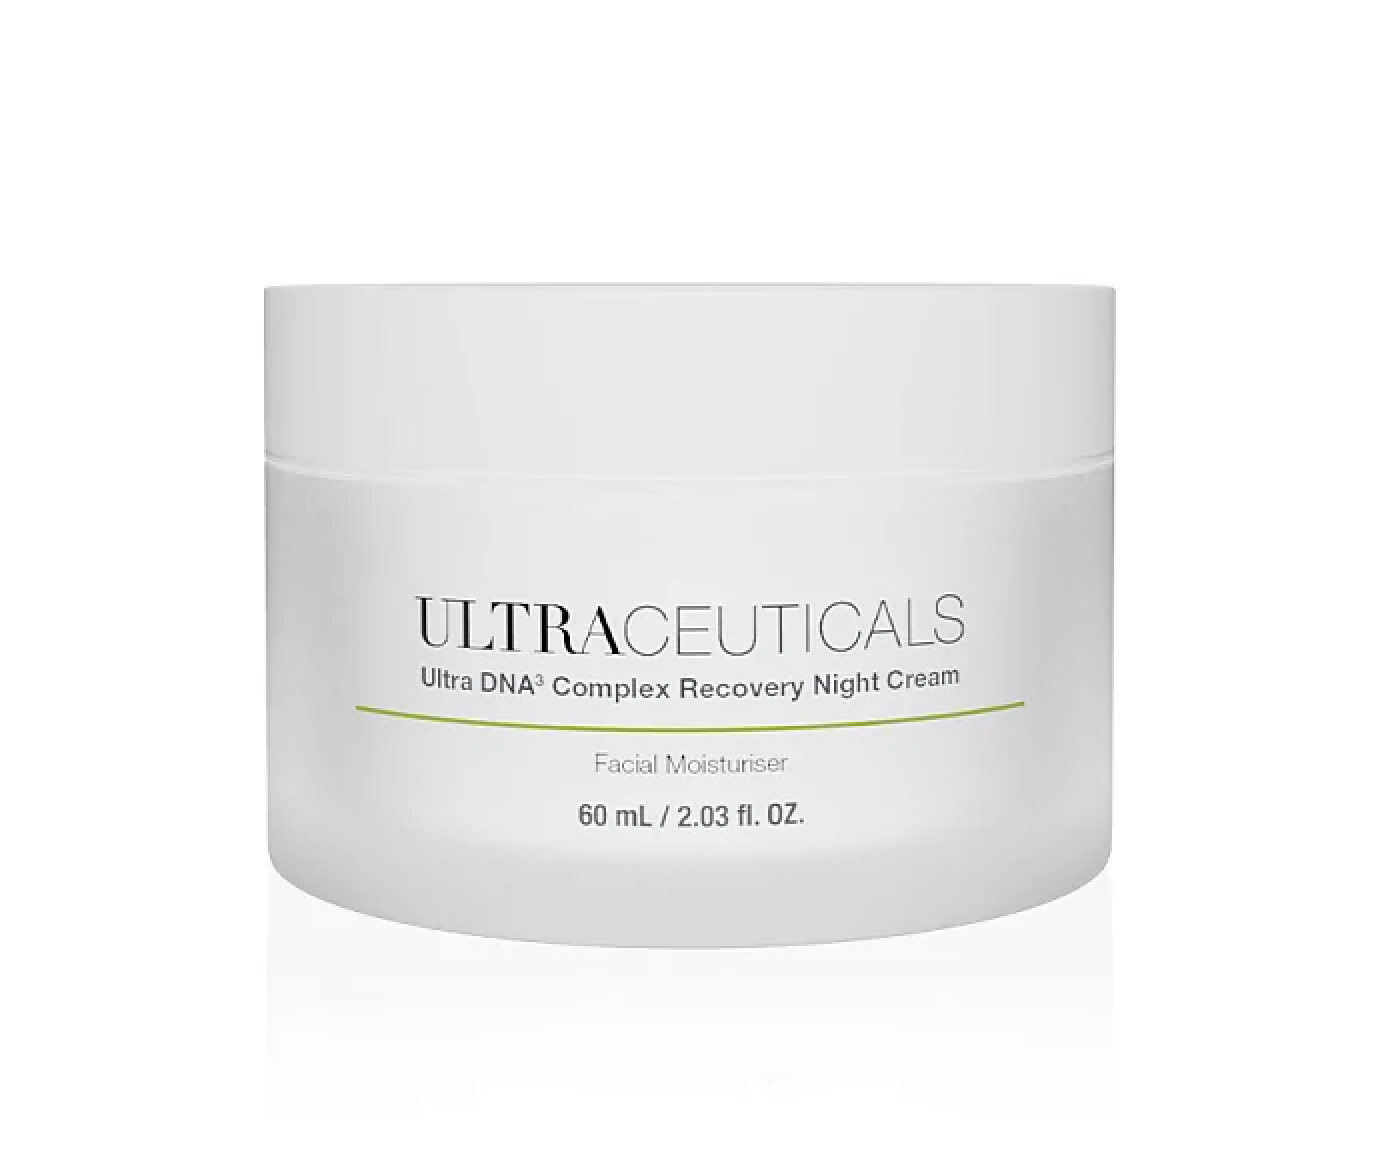 Ultra DNA3 complex recovery night cream